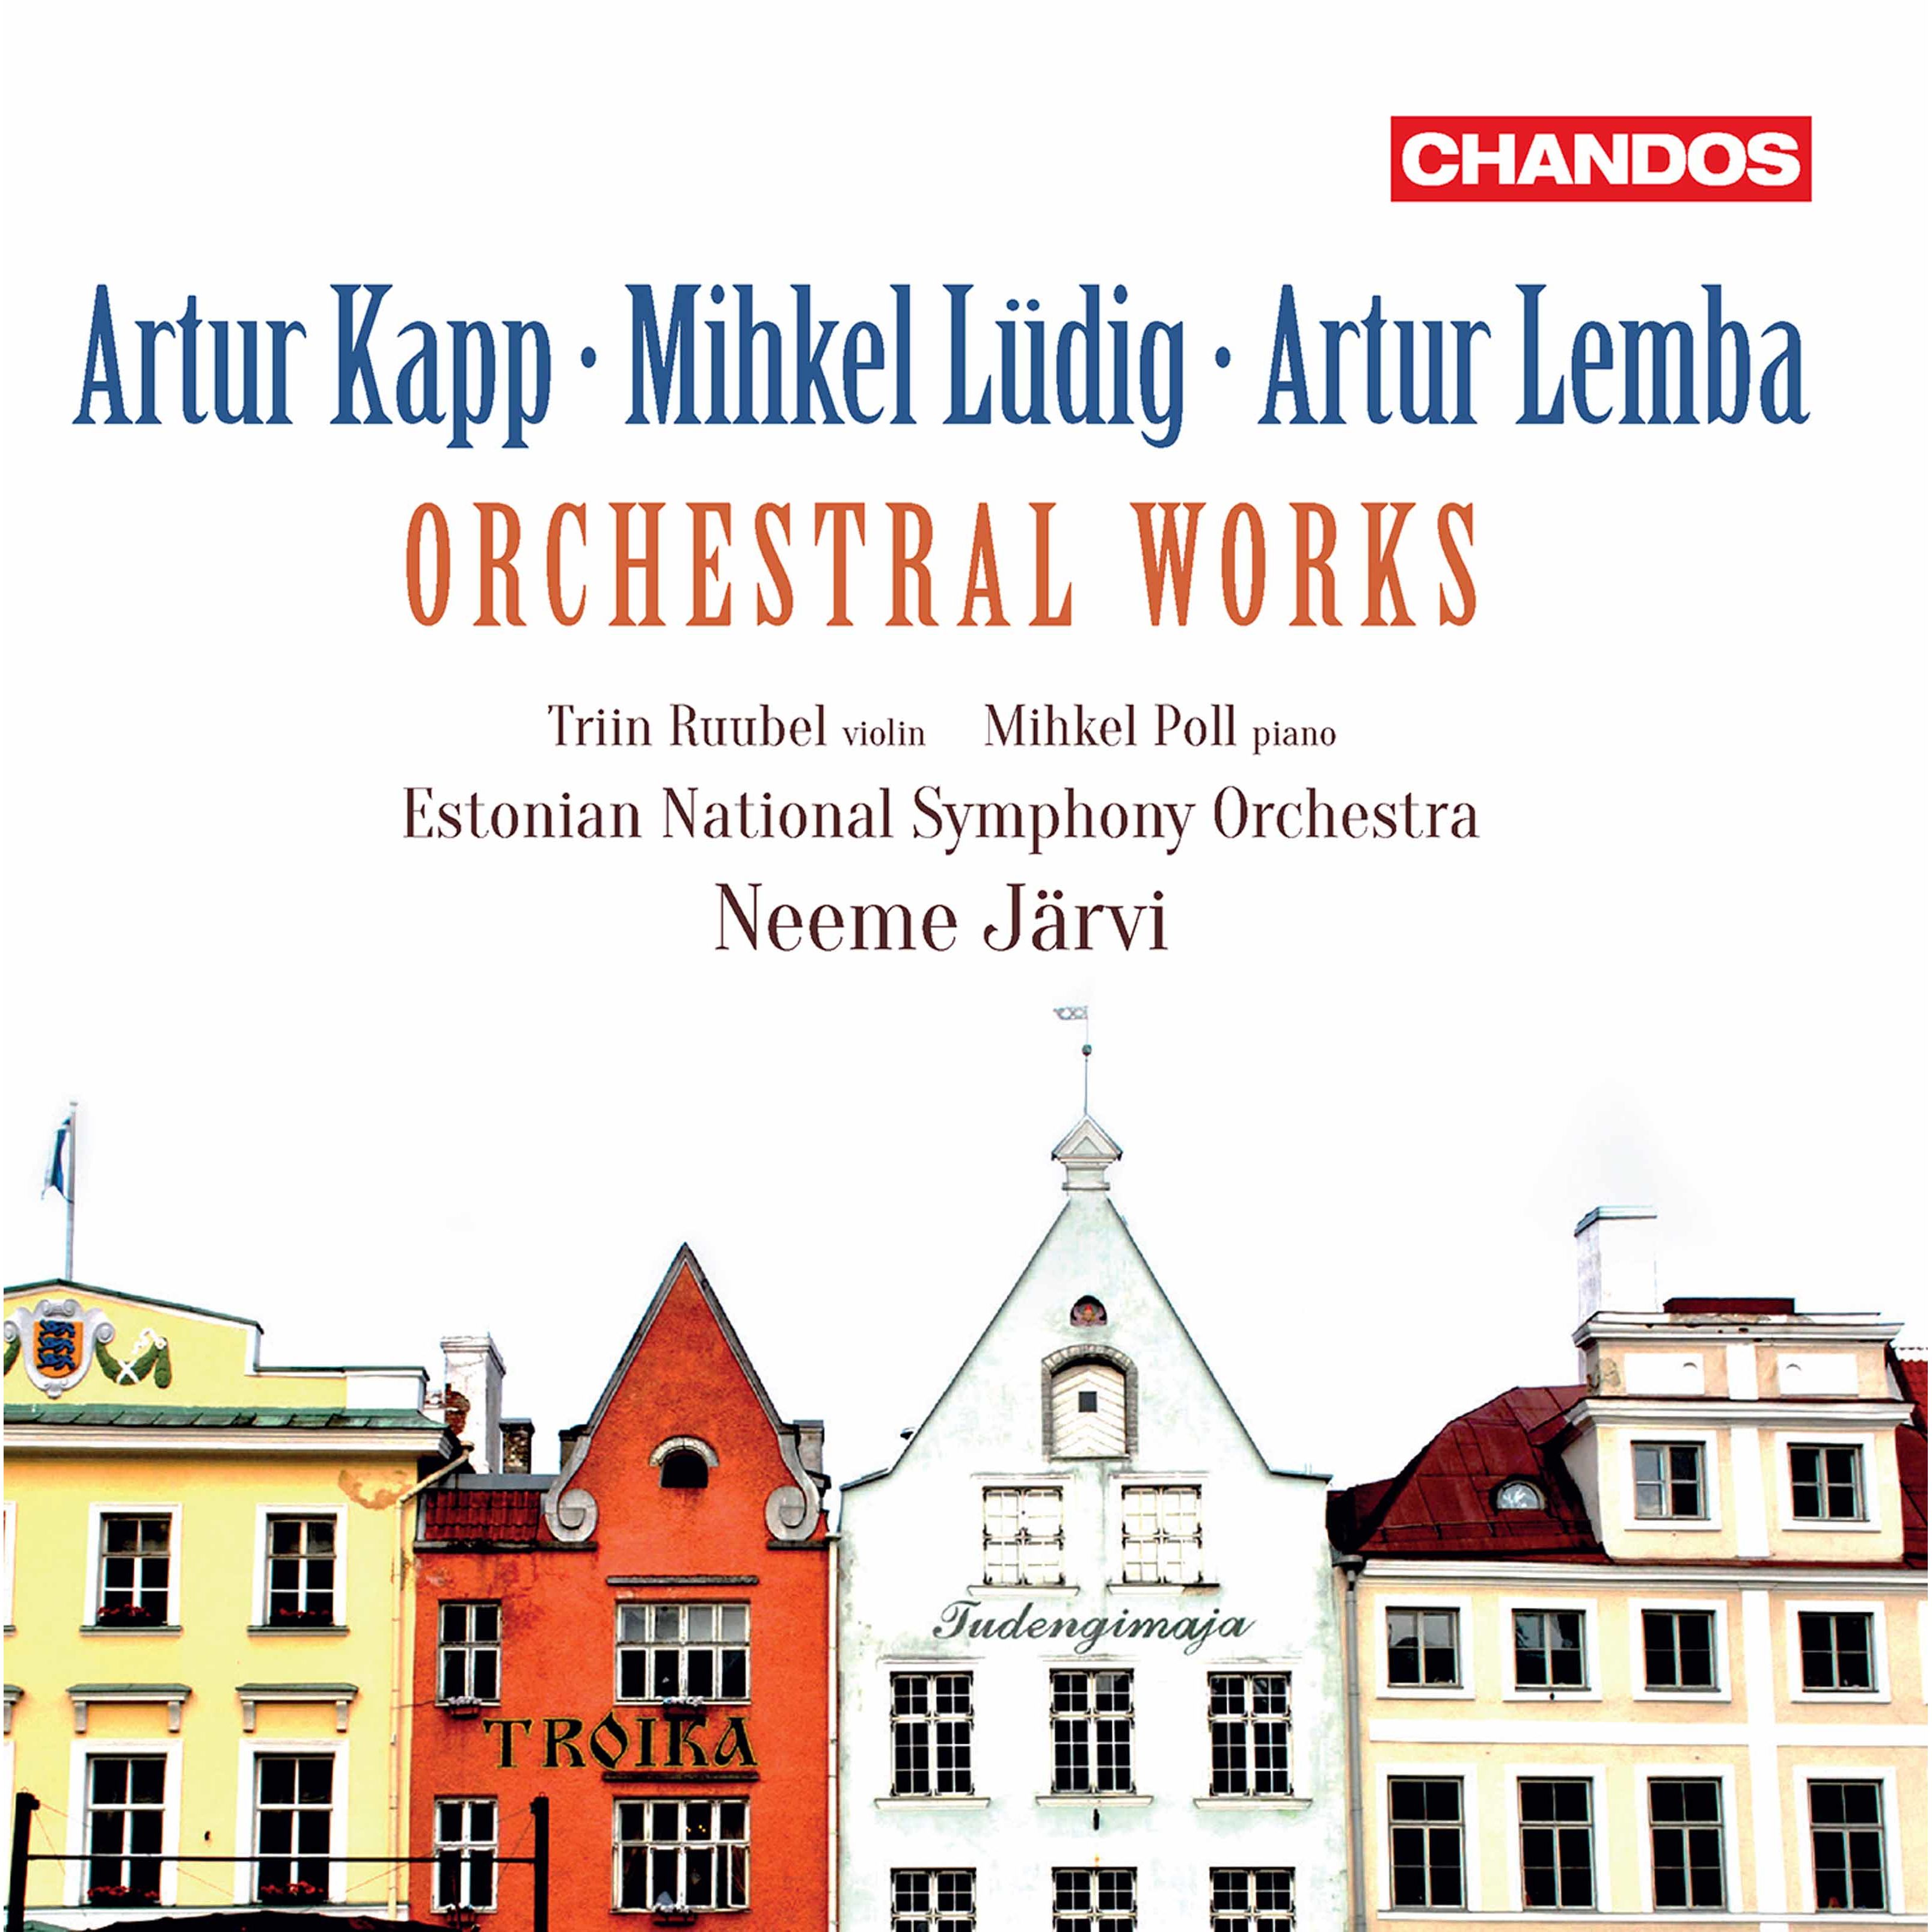 Estonian National Symphony Orchestra & Neeme Jaarvi – Kapp, Ludig & Lemba: Orchestral Works (2020) [FLAC 24bit/48kHz]